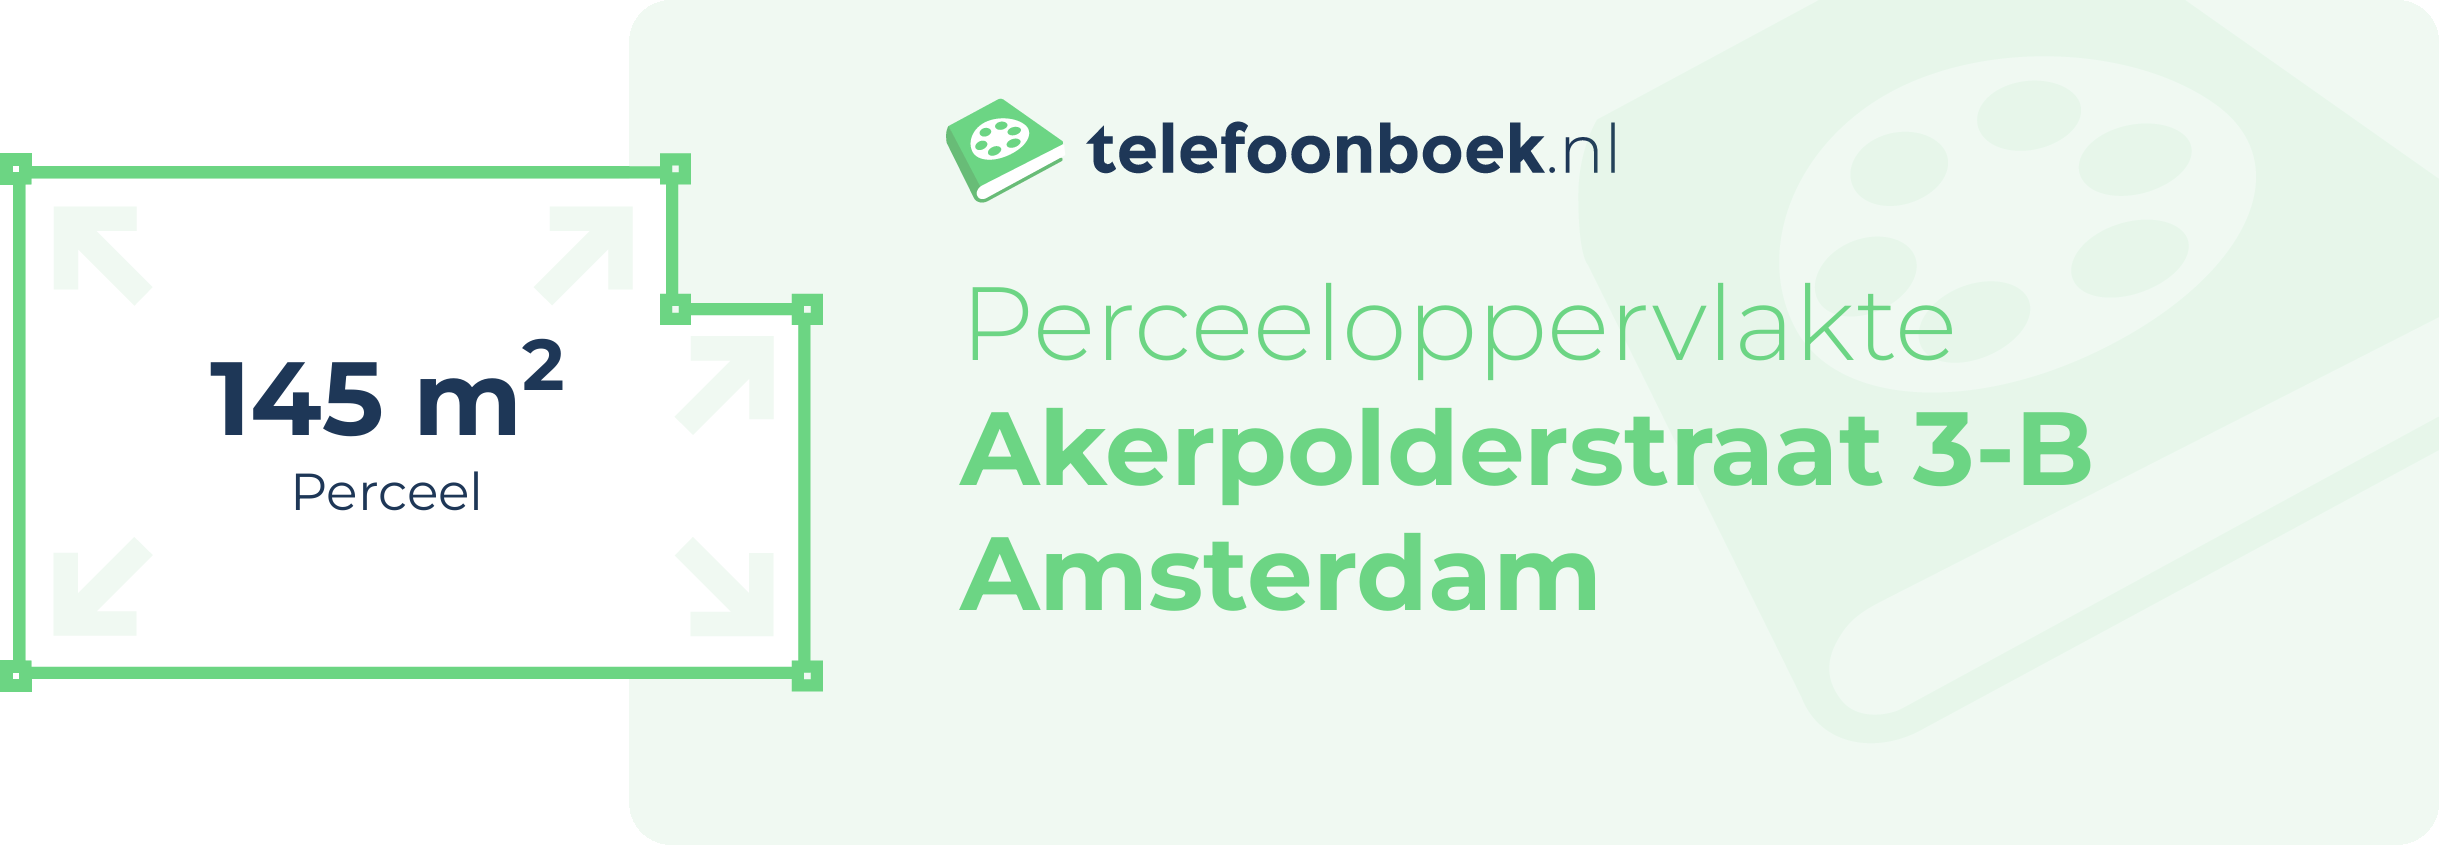 Perceeloppervlakte Akerpolderstraat 3-B Amsterdam